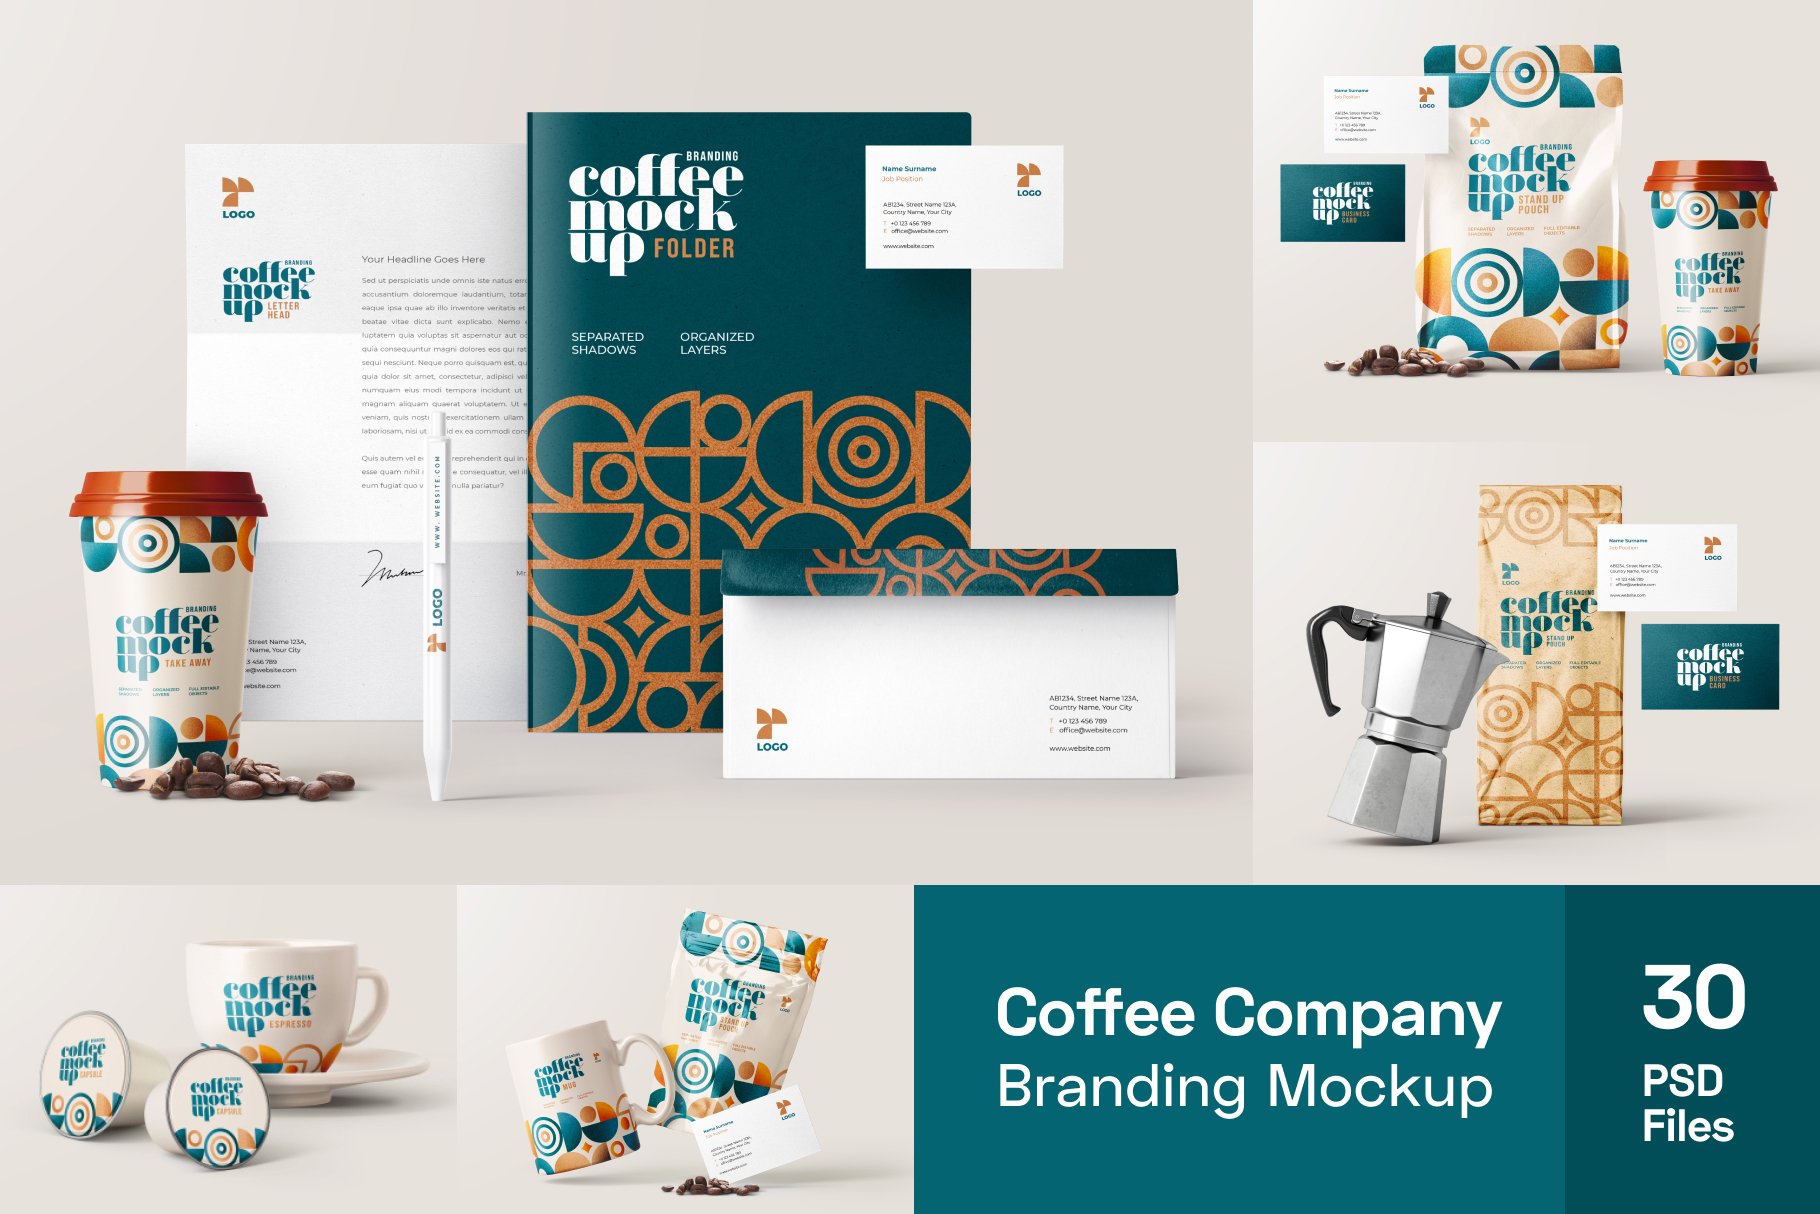 Coffee Branding Mockup Bundle cover image.